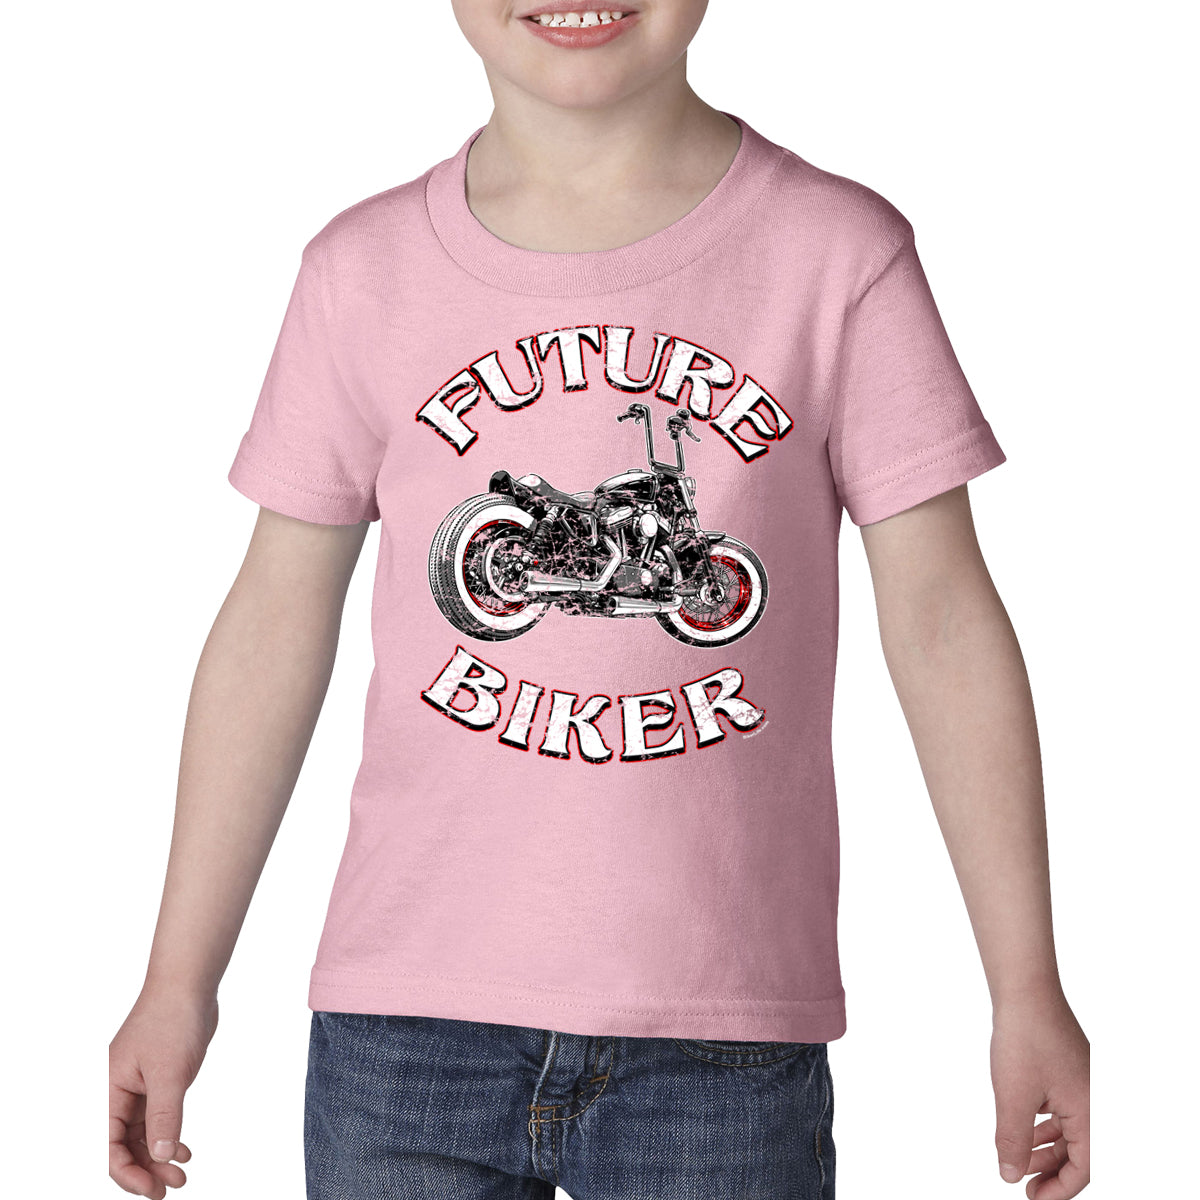 Kids Life Biker – Biker Future Clothing Motorcycle T-Shirt